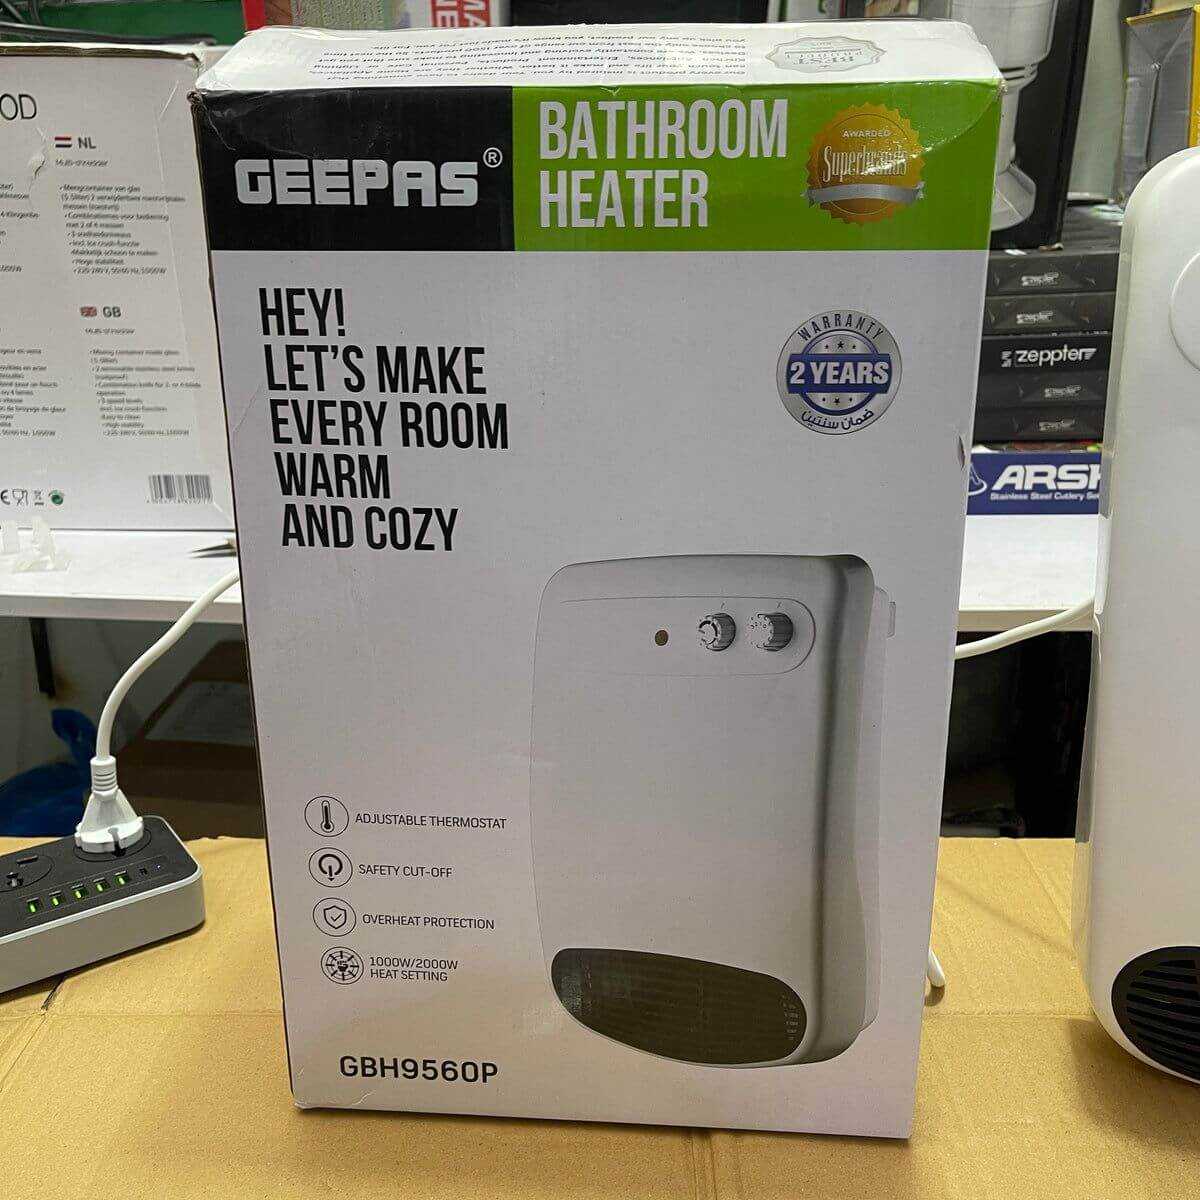 Geepas Bathroom Heater GBH9560P